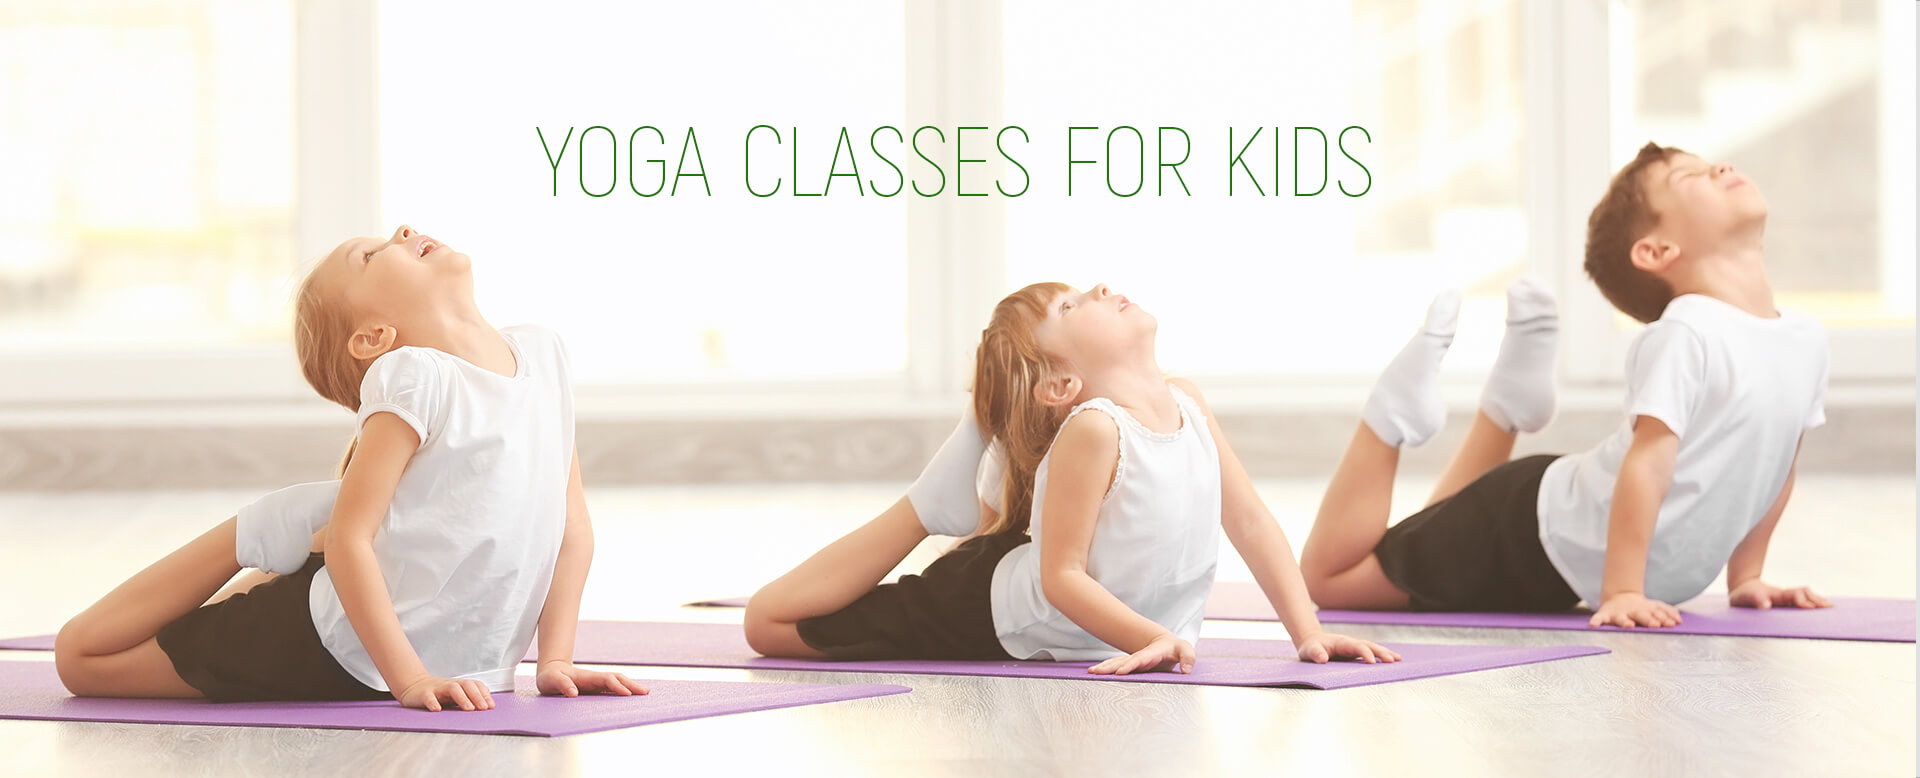 Yoga Classes for Kids